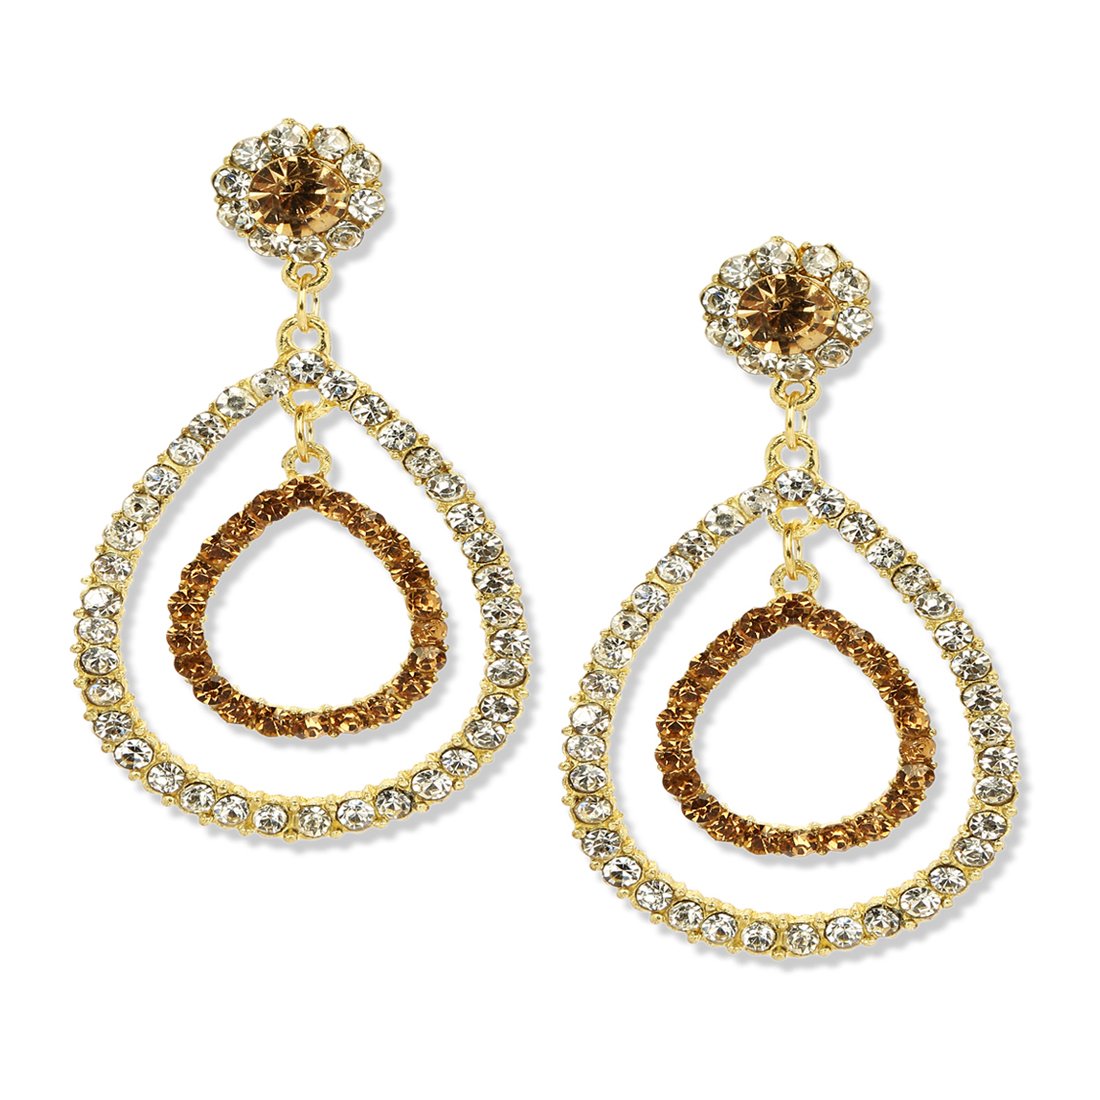 Gold toned double hoop studded earrings